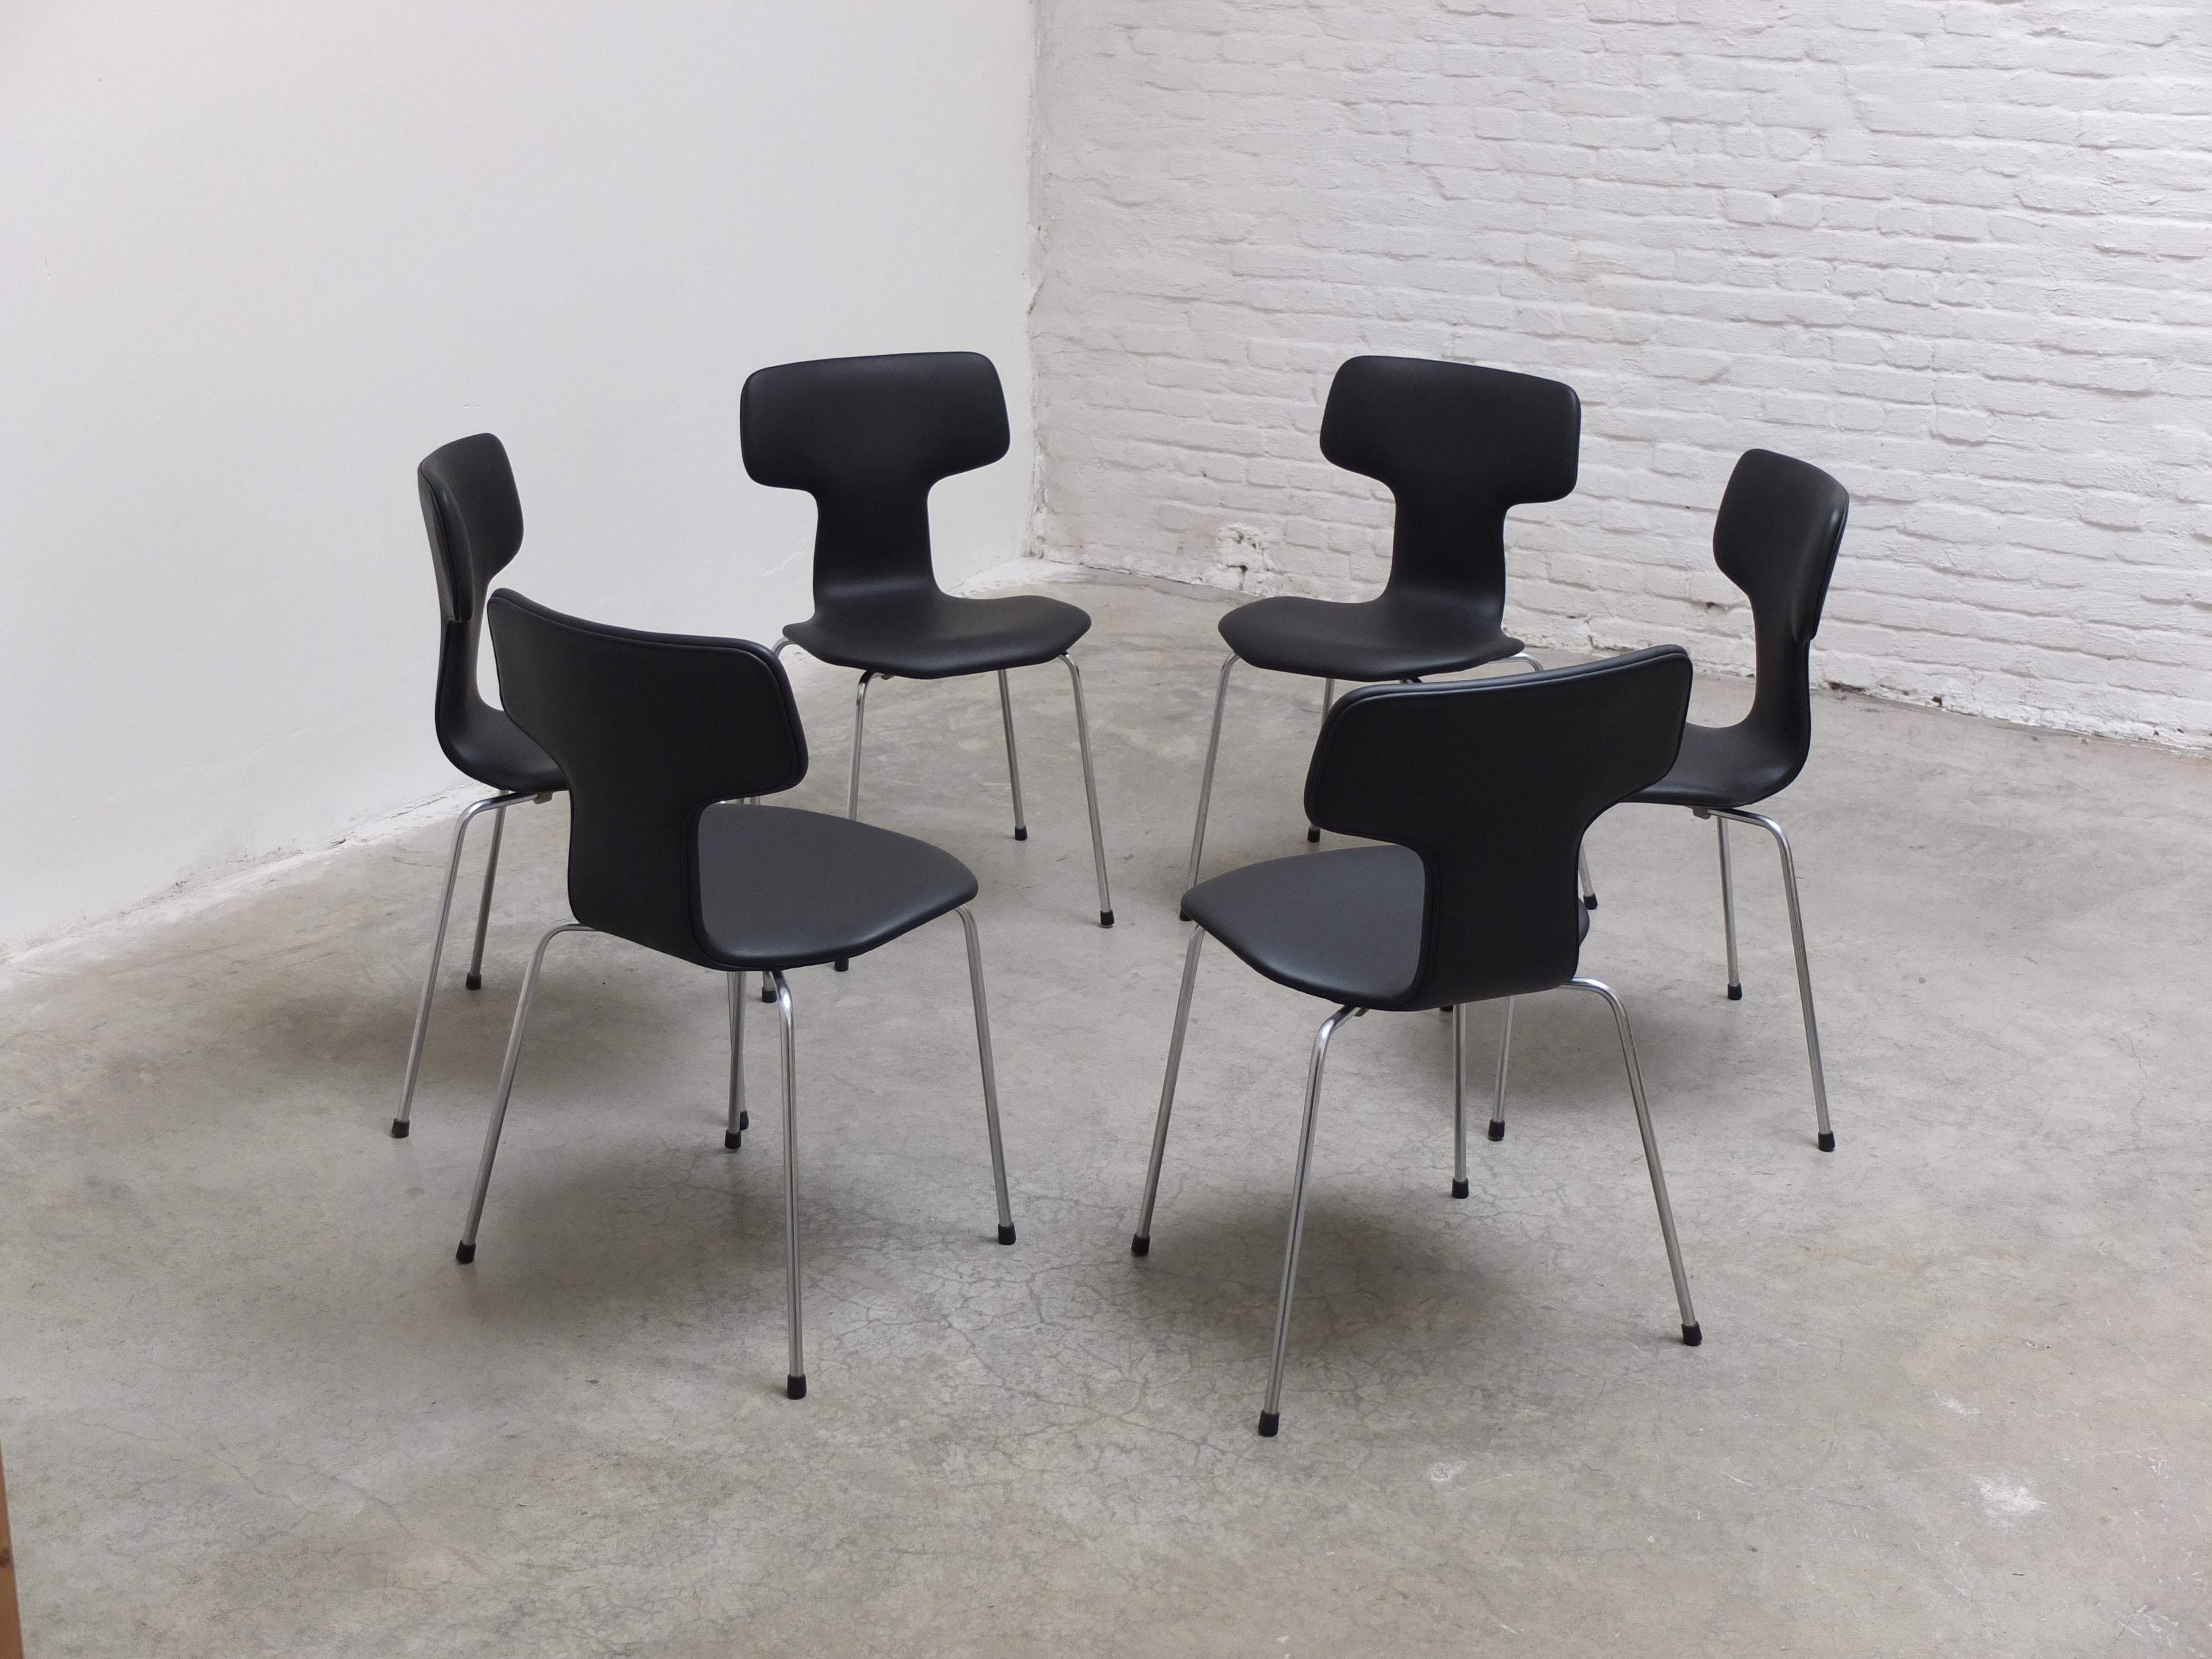 Scandinavian Modern Set of 6 'Hammer' Chairs in Leather by Arne Jacobsen for Fritz Hansen, 1967 For Sale